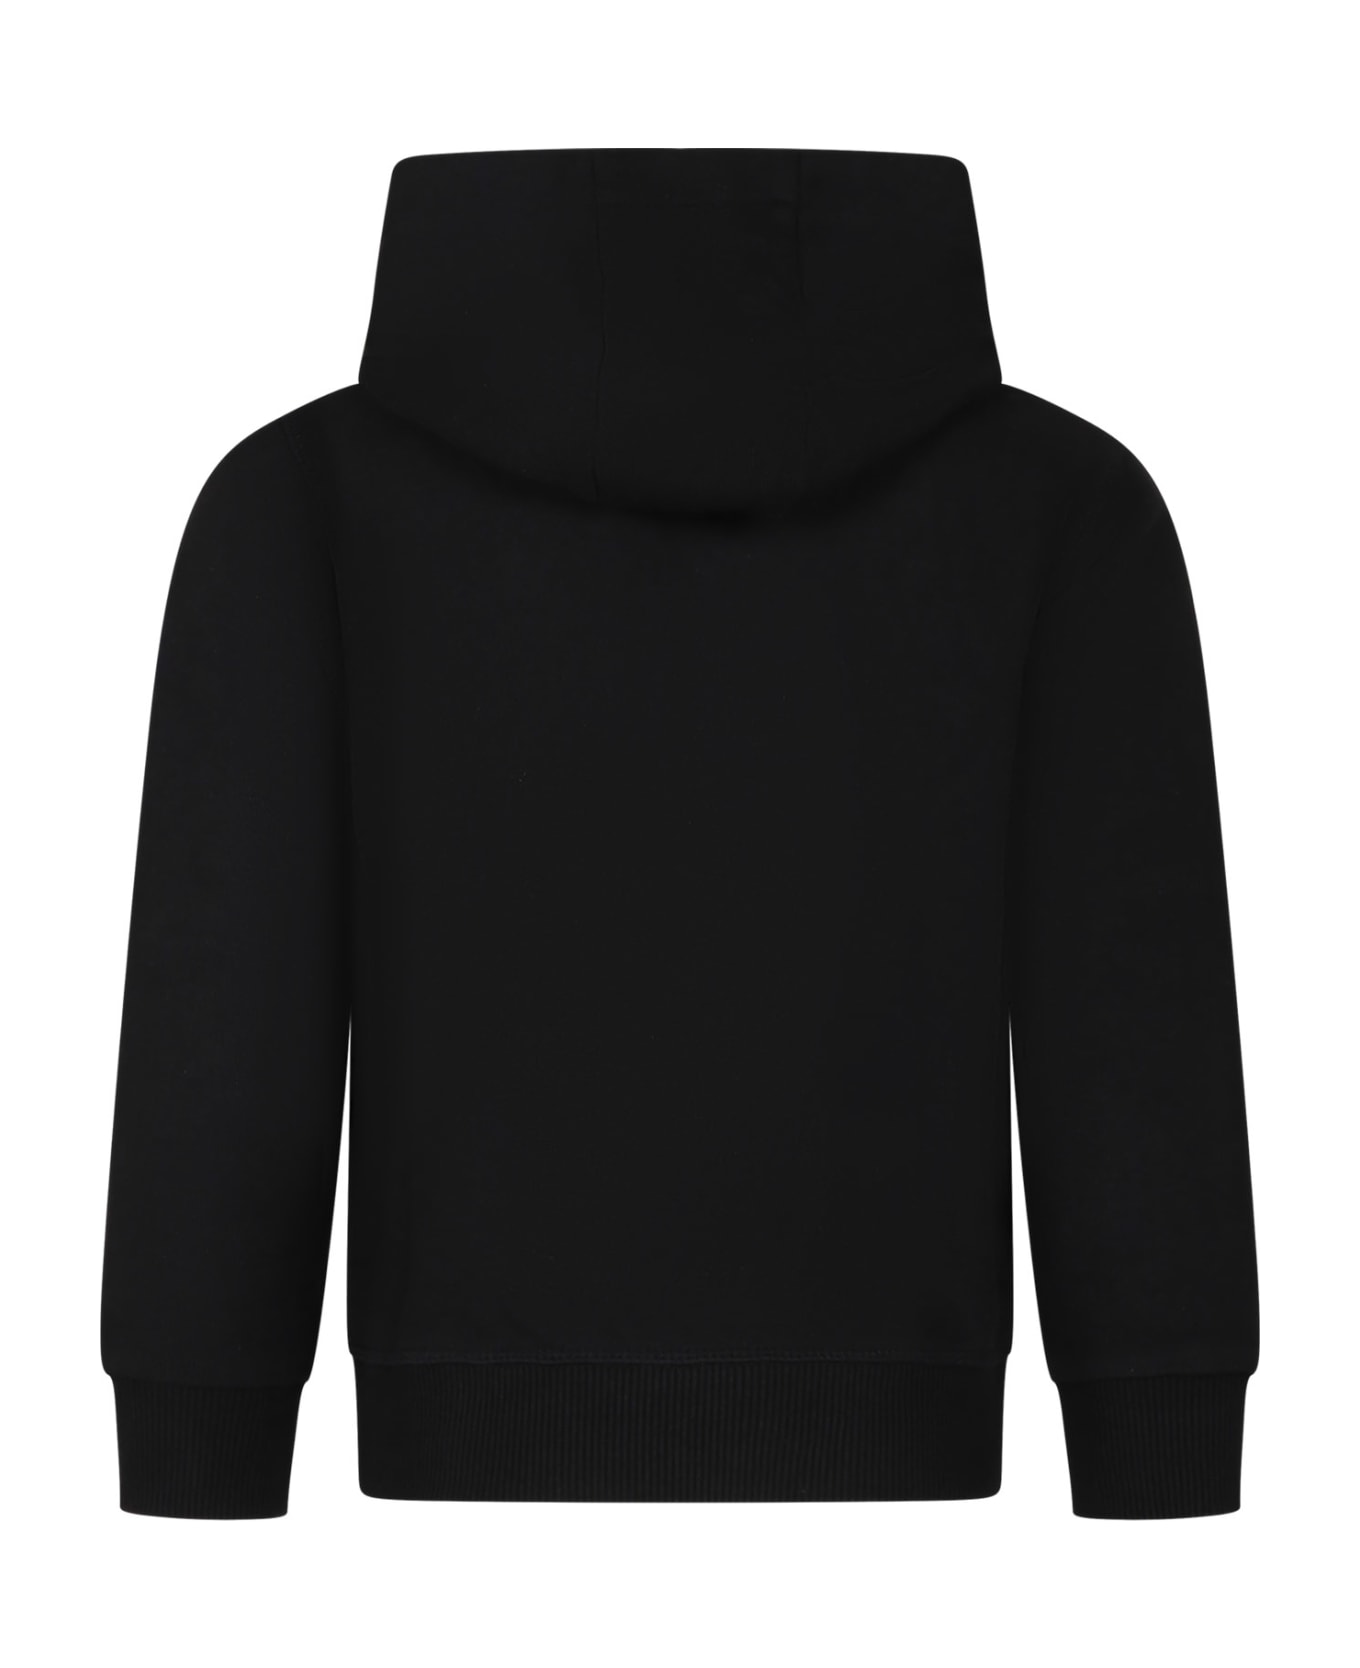 Hugo Boss Black Sweatshirt For Boy With Hood And Logo - Black